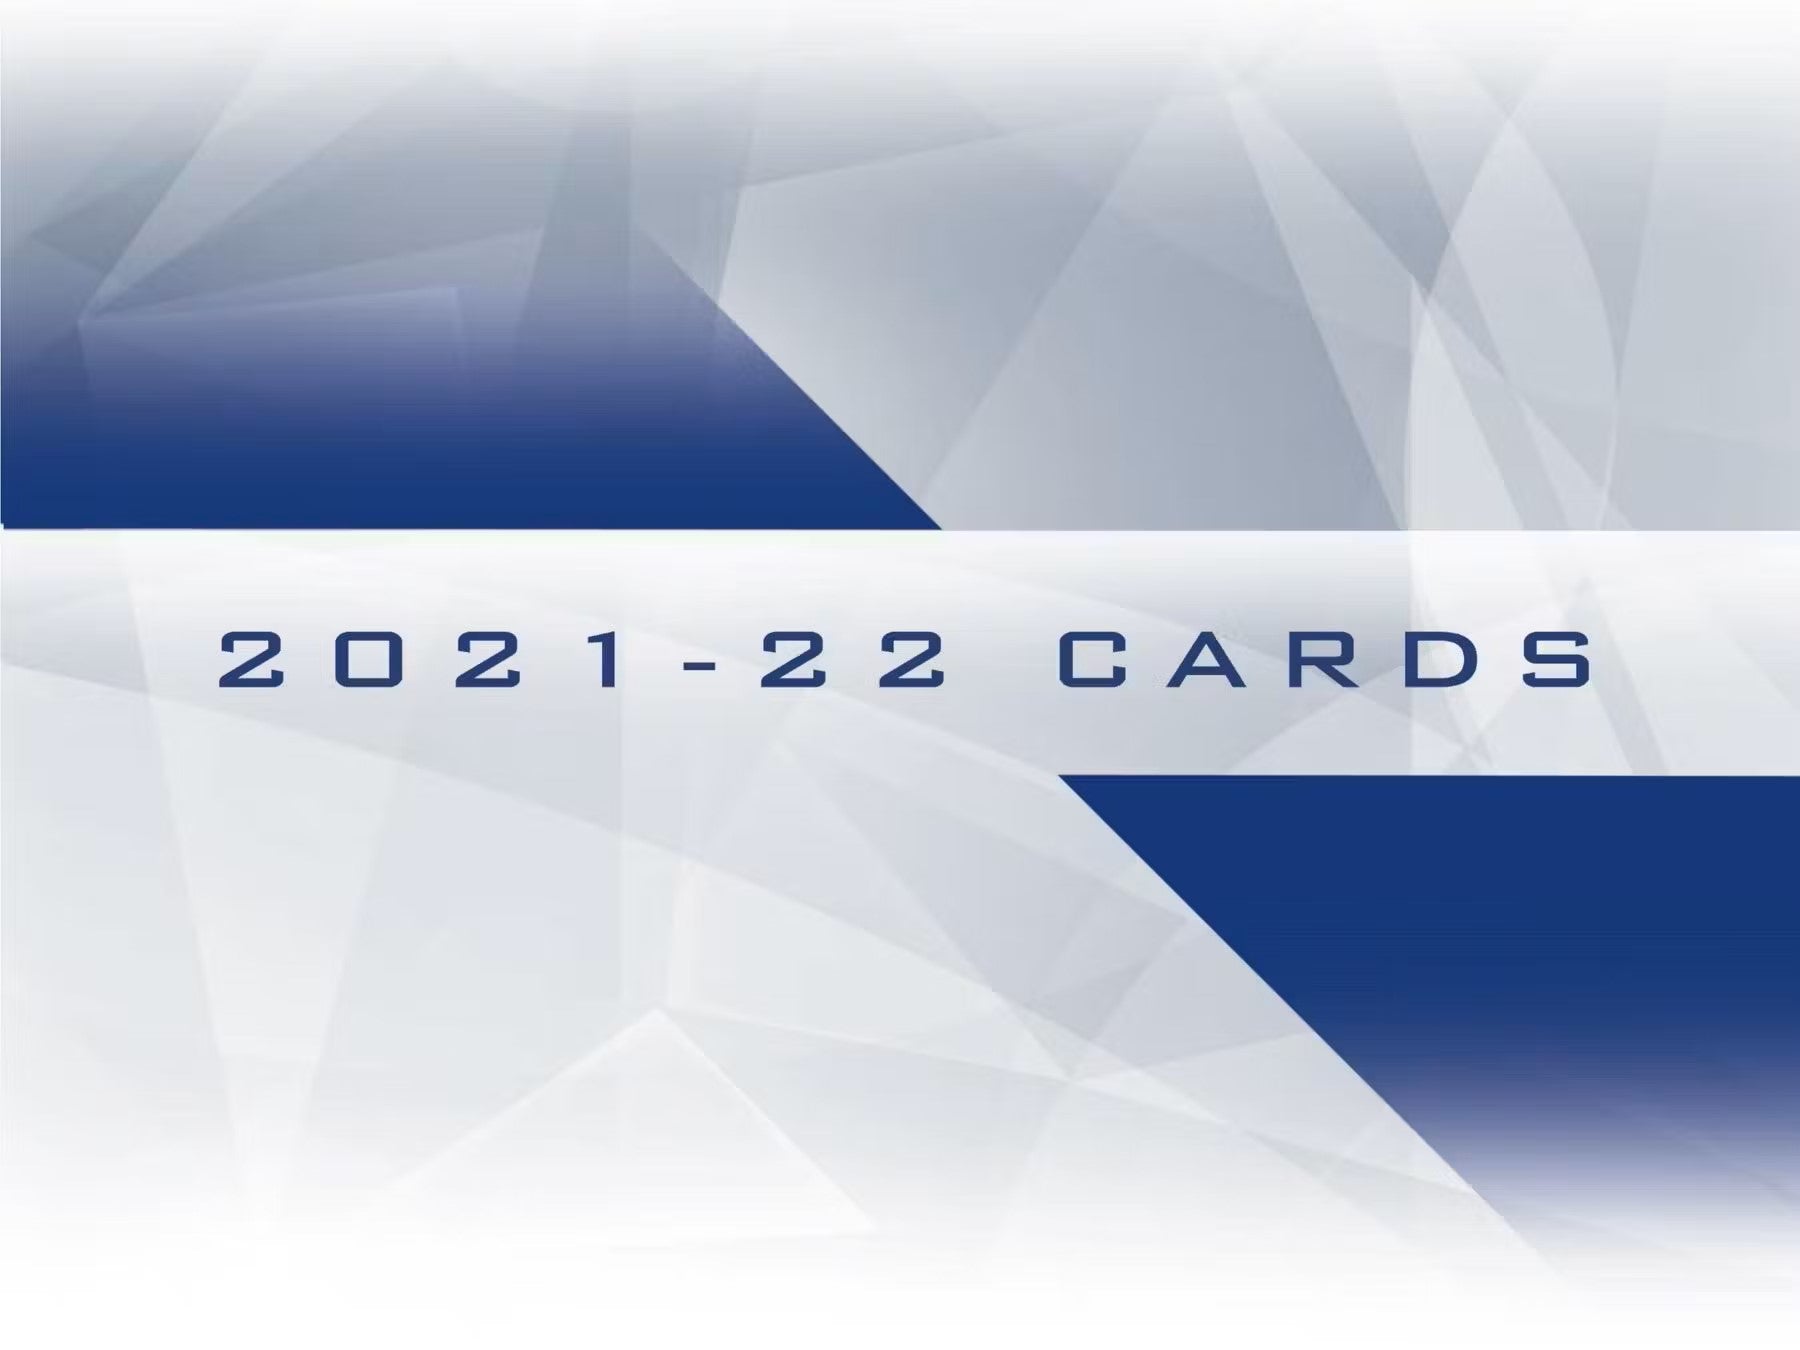 Hockey - 2022/23 - Upper Deck Clear Cut - Boîte Hobby (1 Carte)